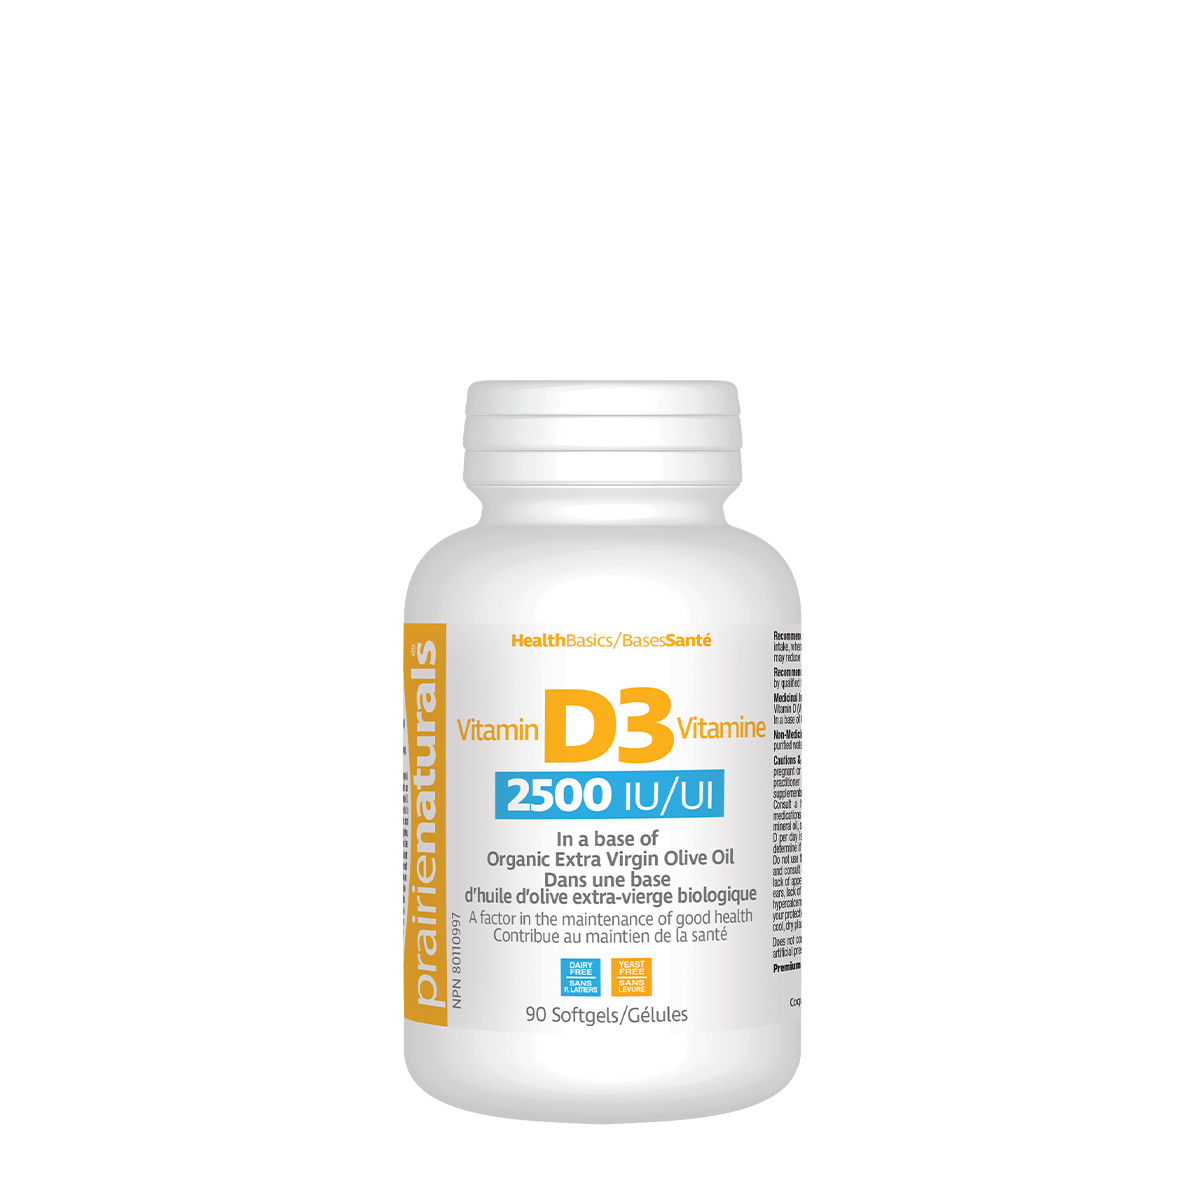 Vitamin D3 - Bone Health Supplement - Health Basics